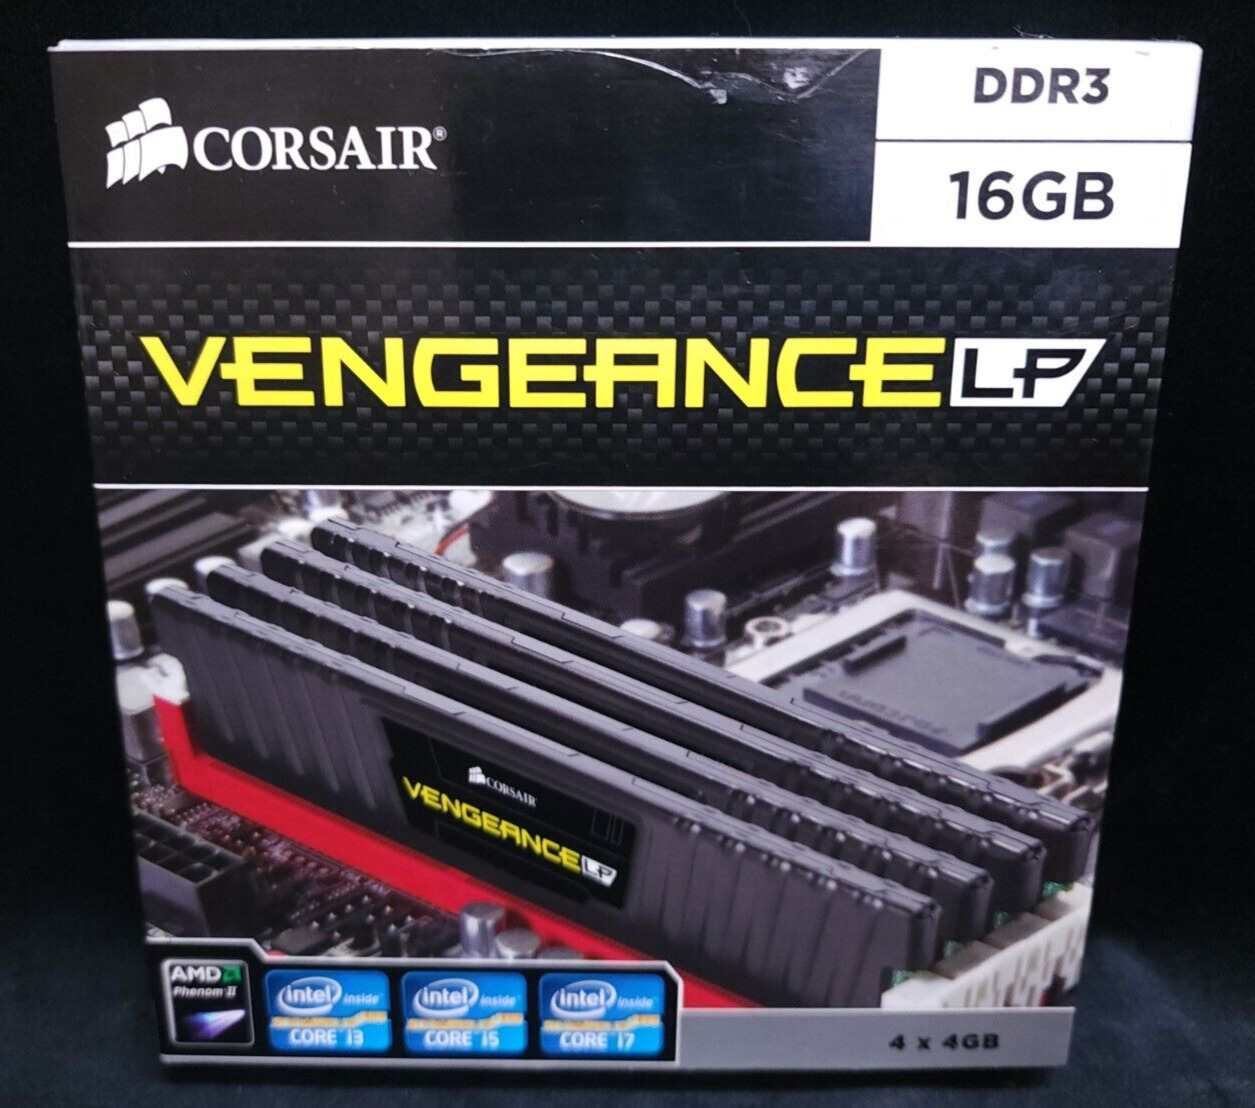 Corsair CML16GX3M4A1600C9 Vengeance LP 16 GB (4 x 4GB) DDR3 1600 MHz PC3 12800